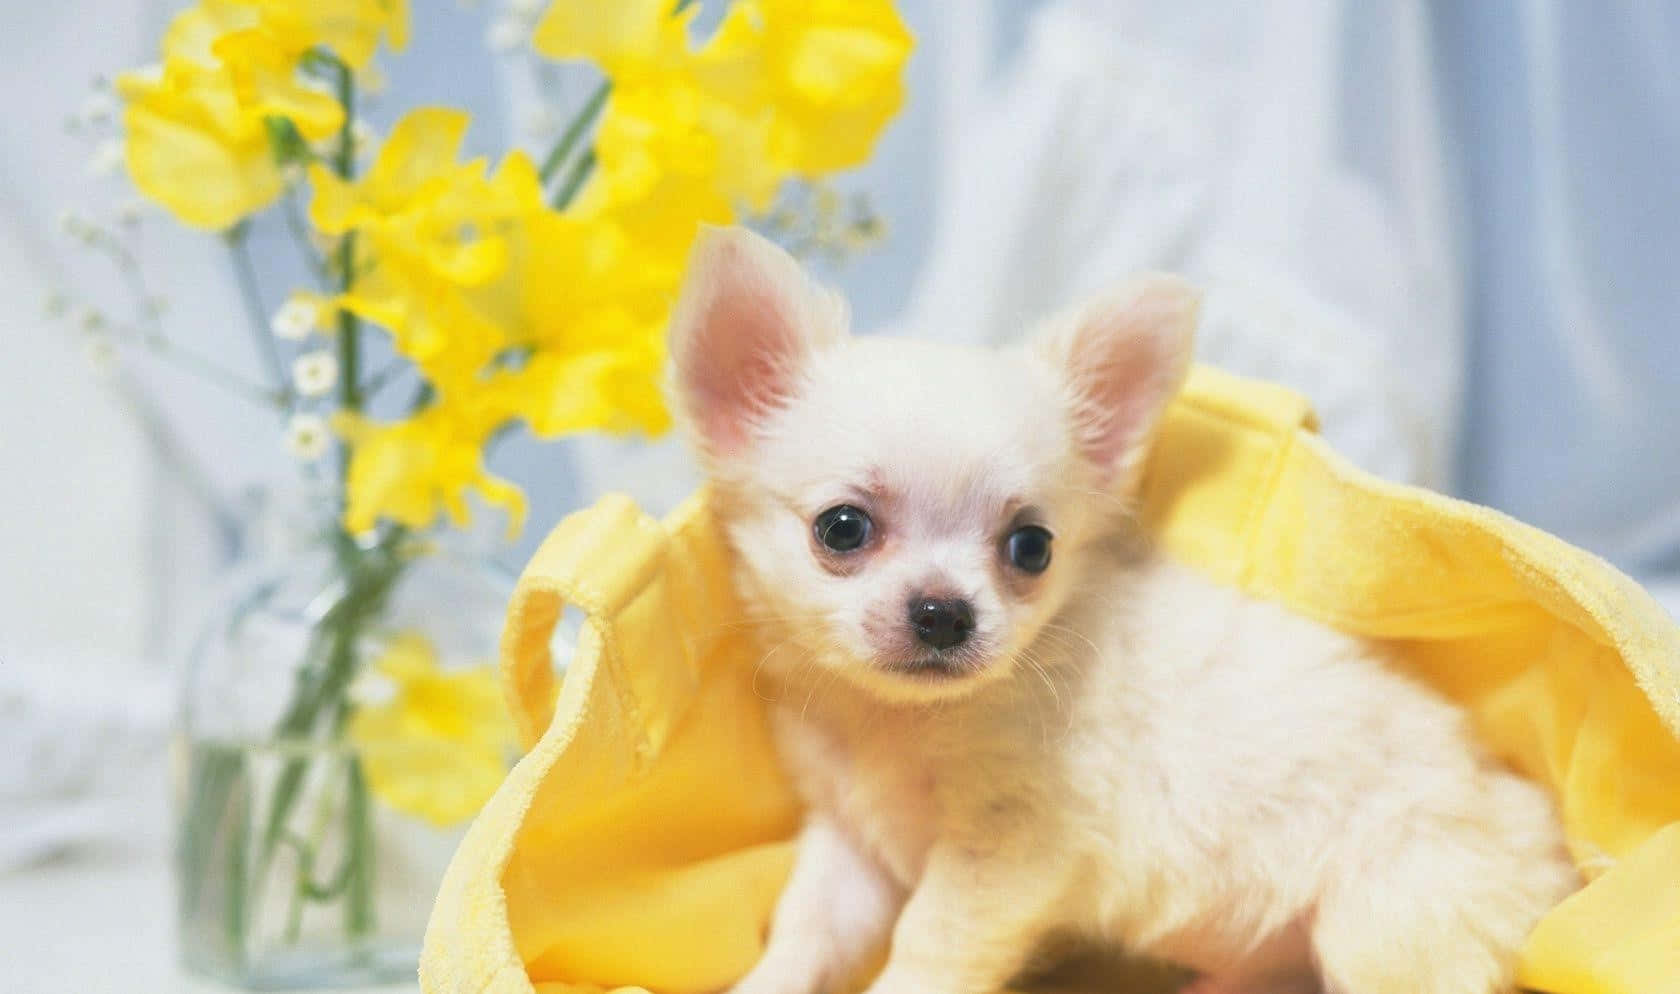 An Adorable Chihuahua Dog